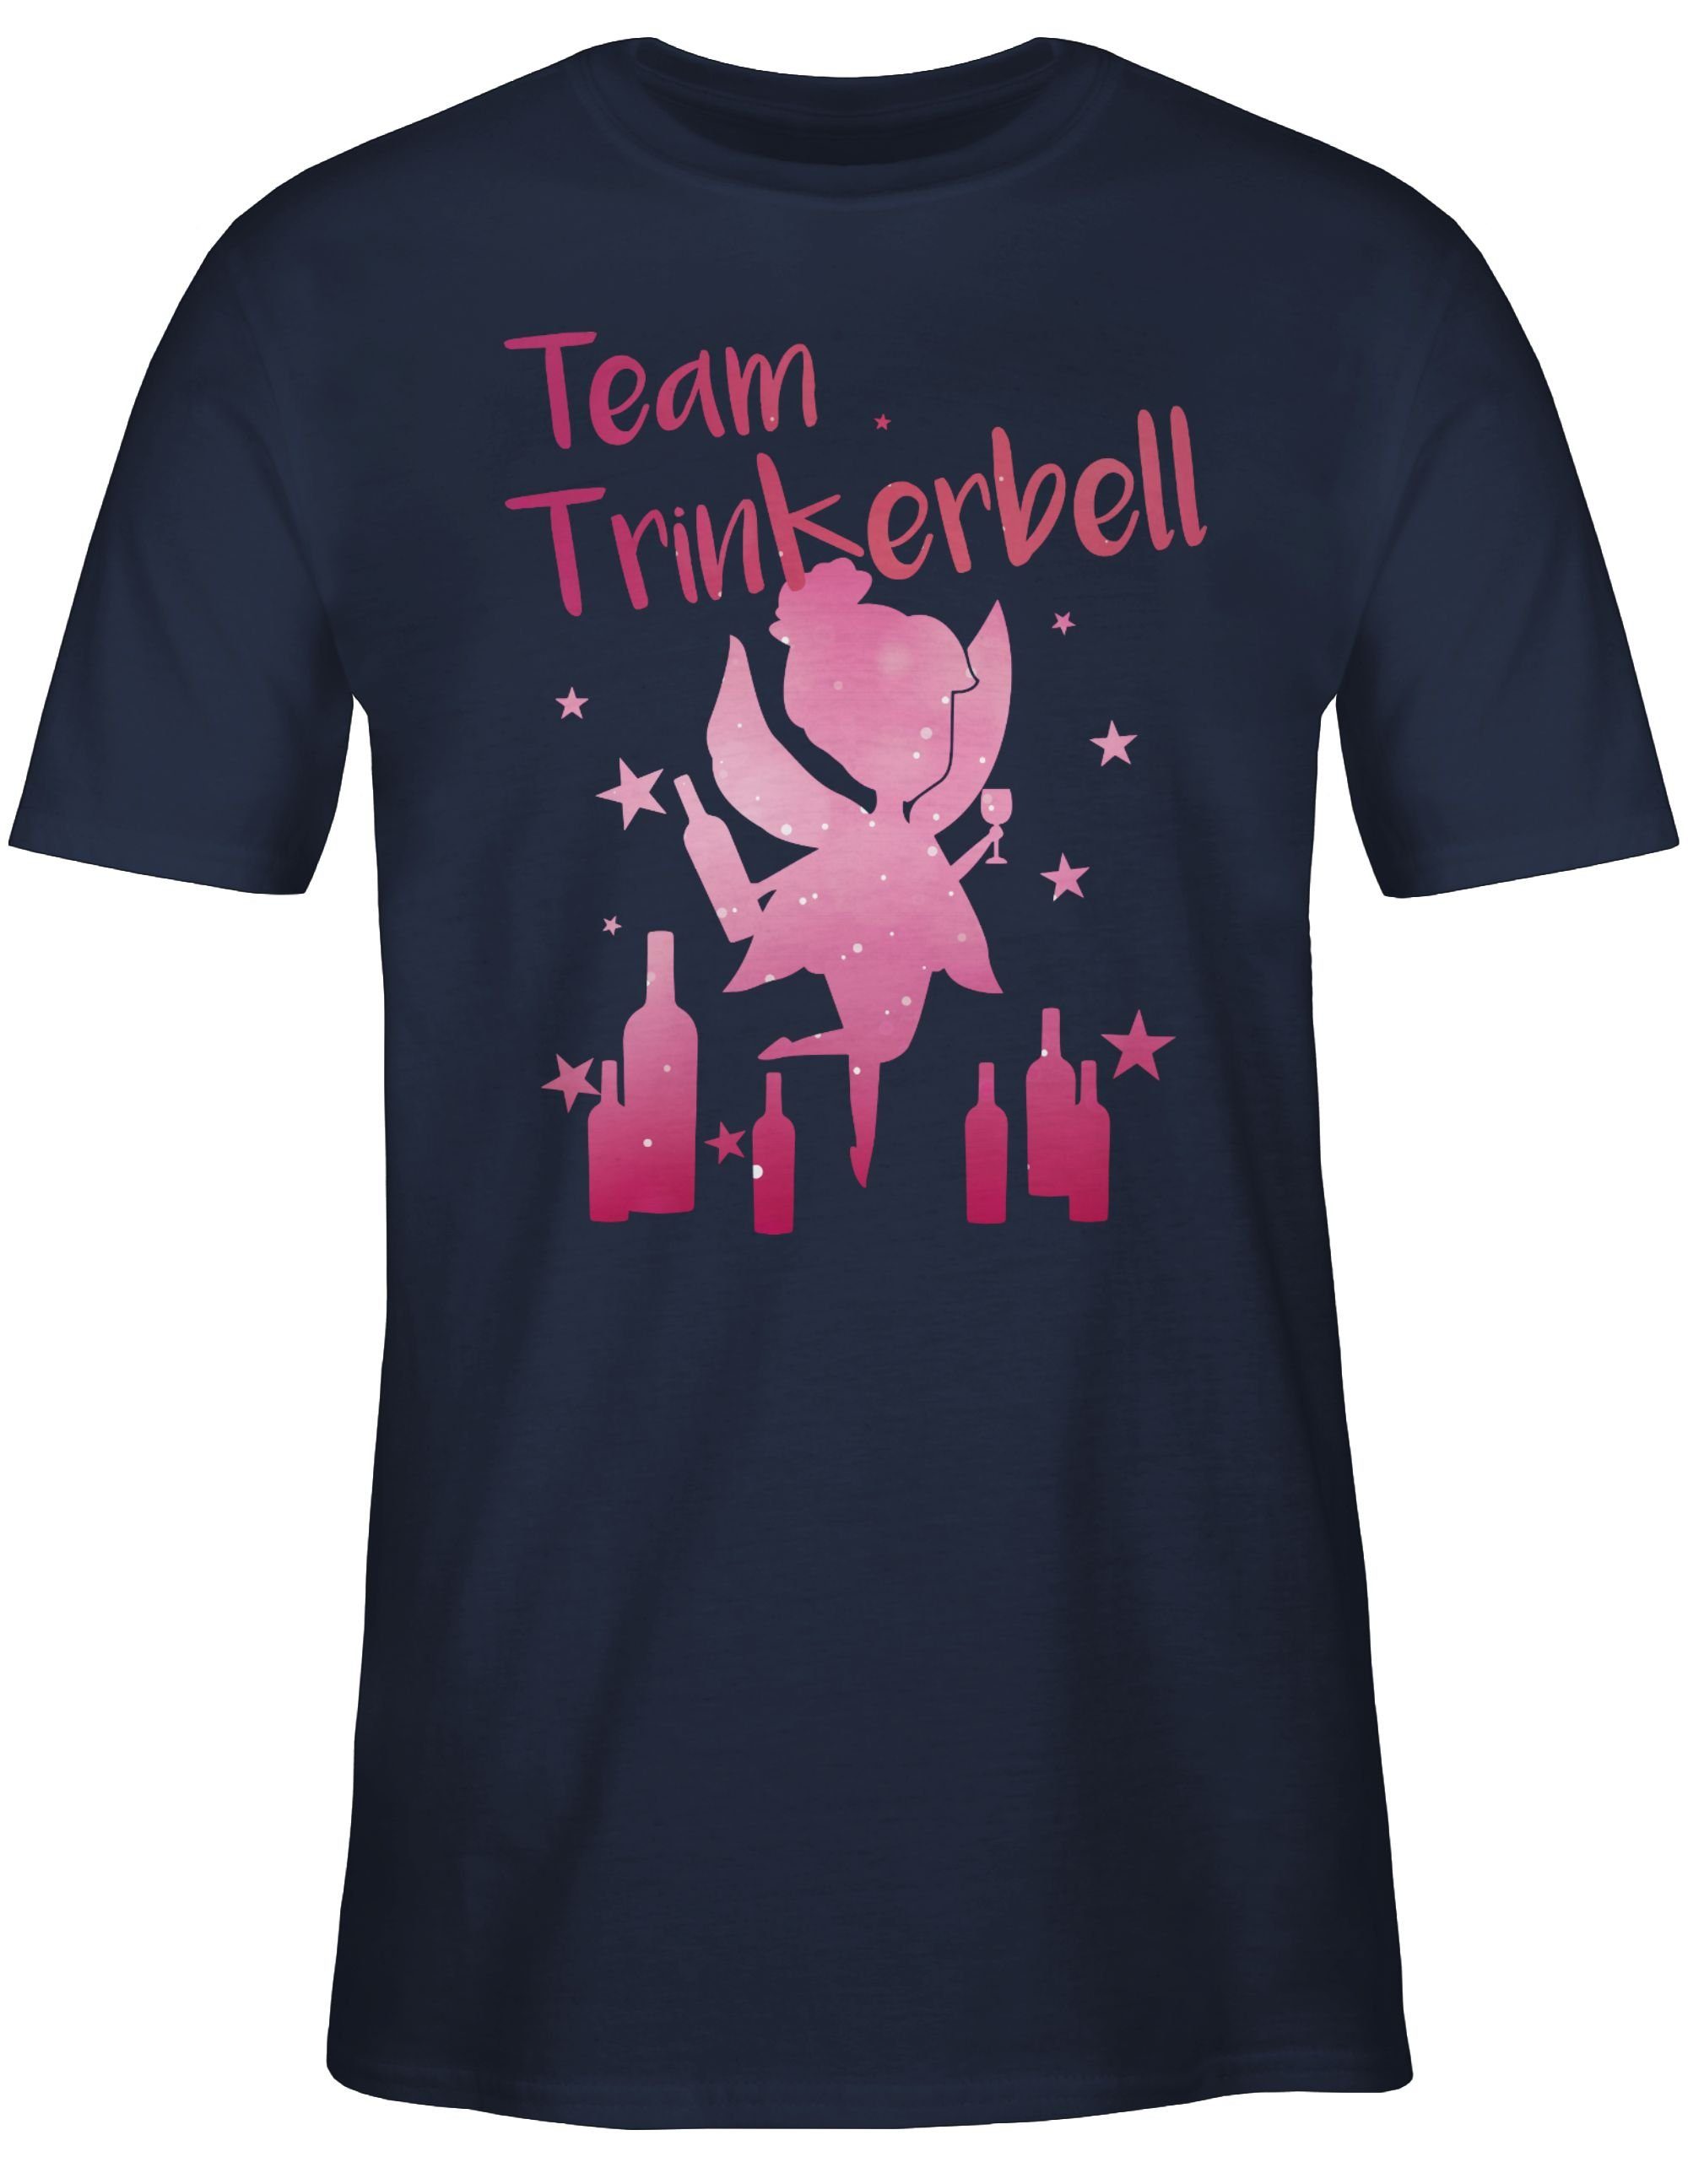 Shirtracer T-Shirt Team Trinkerbell Karneval Outfit 02 Navy Blau